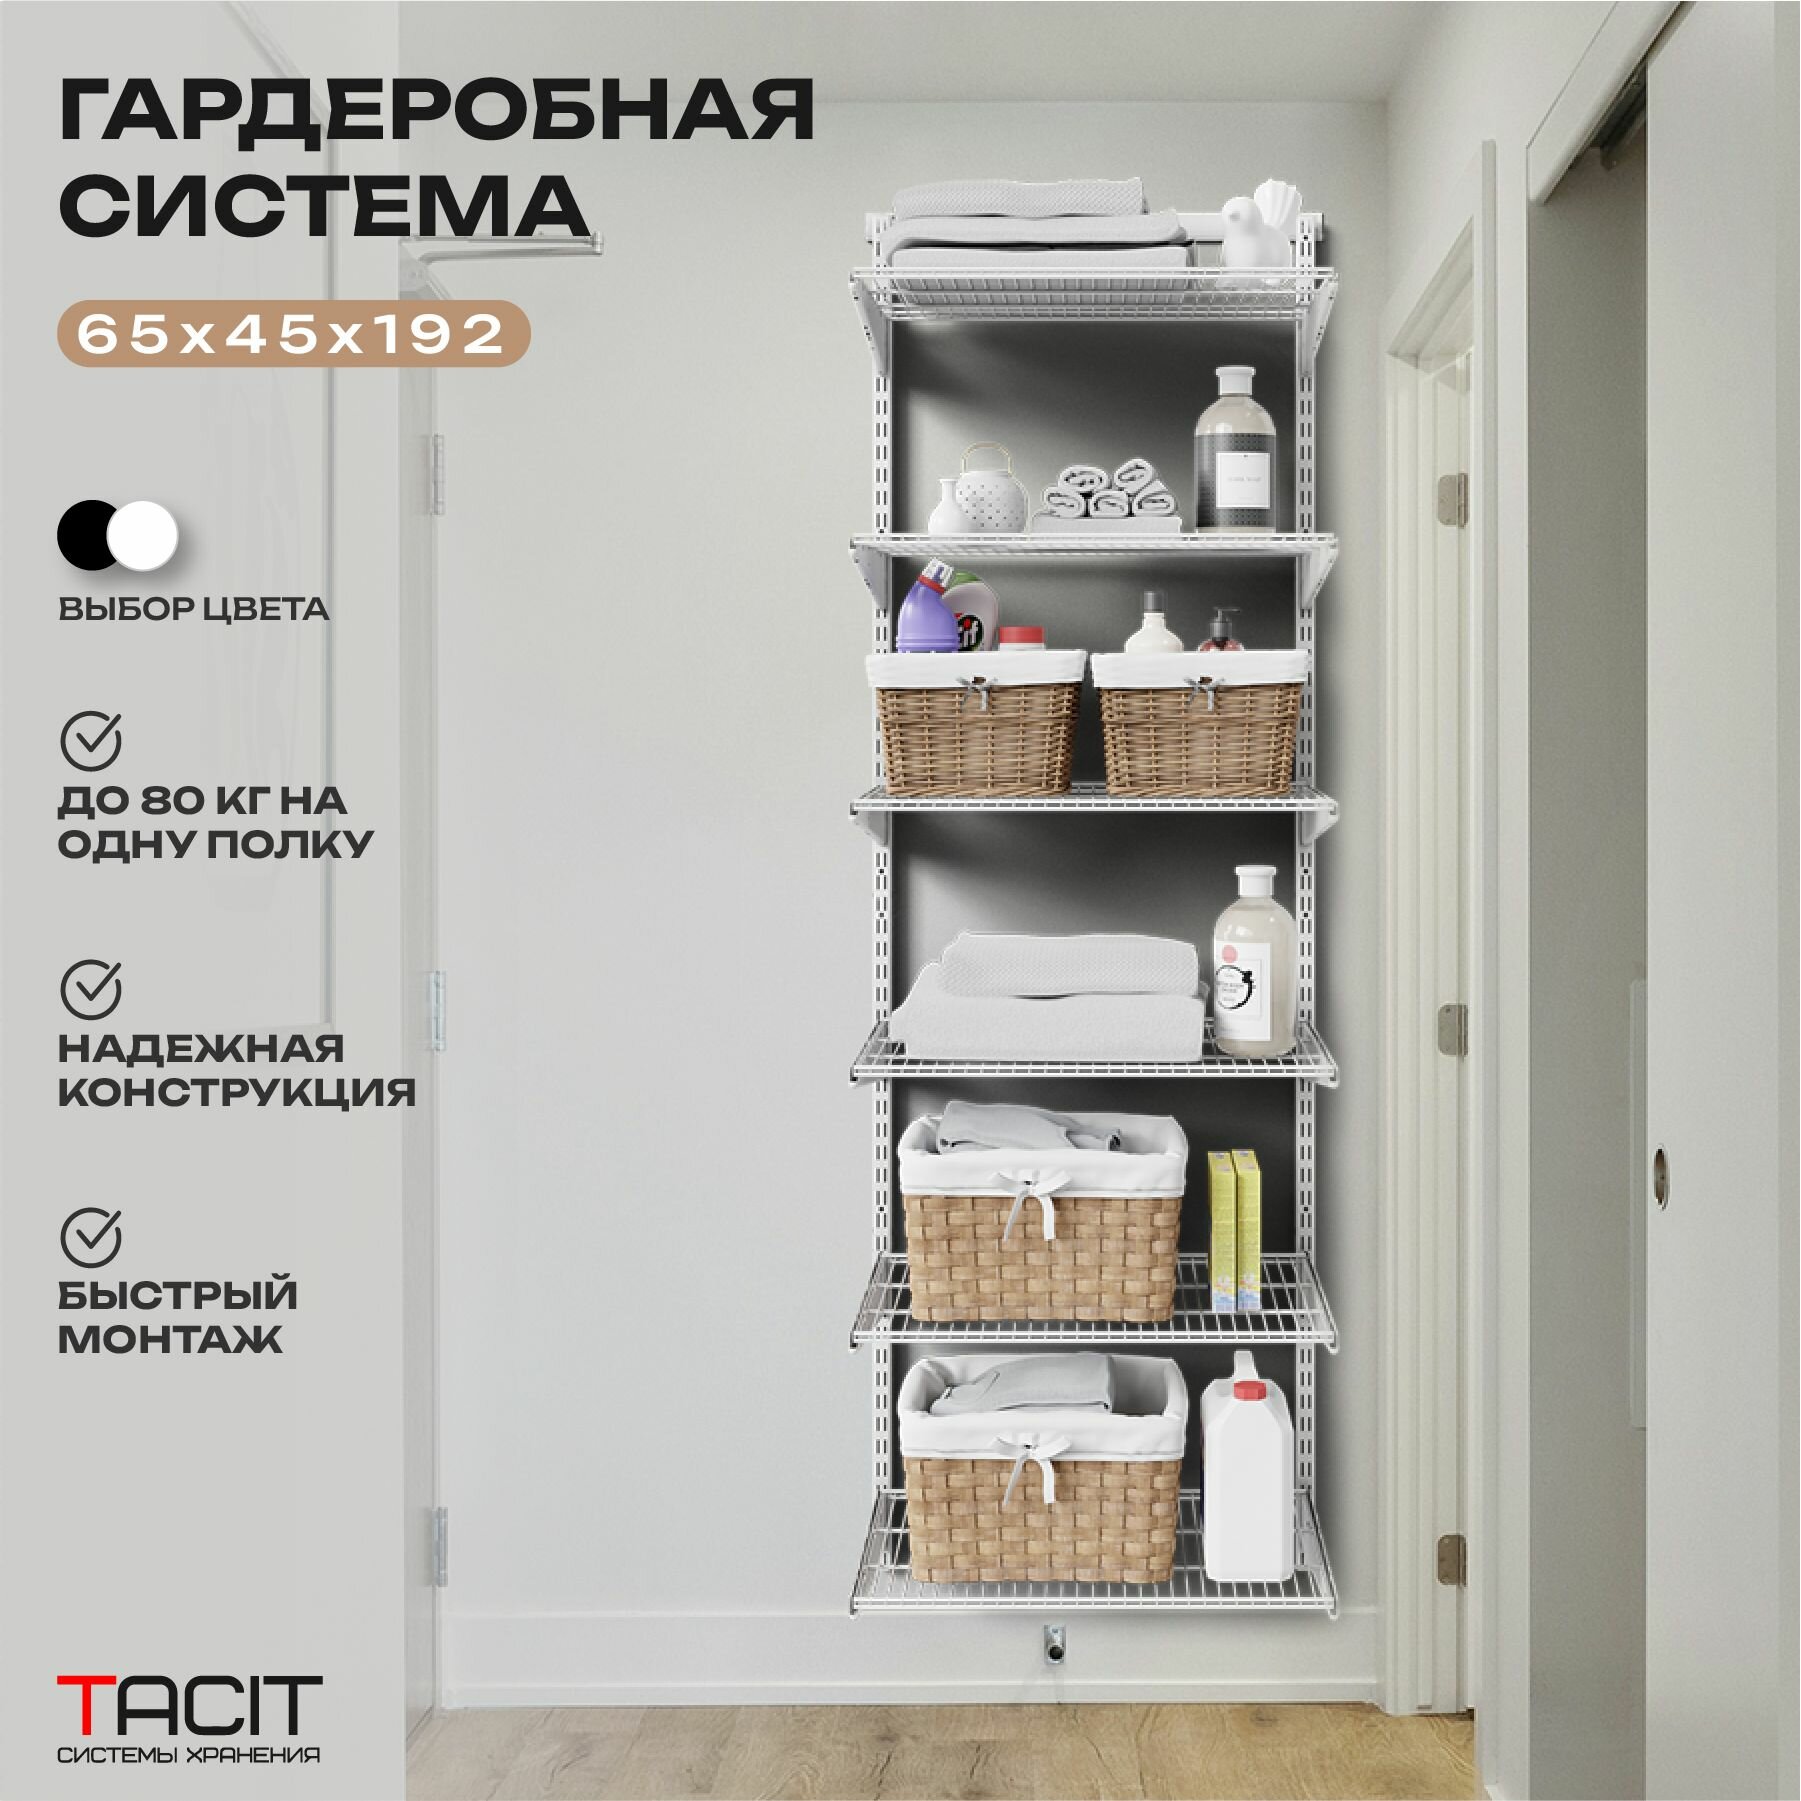 Гардеробная система хранения TACIT PS.19 65х45х192